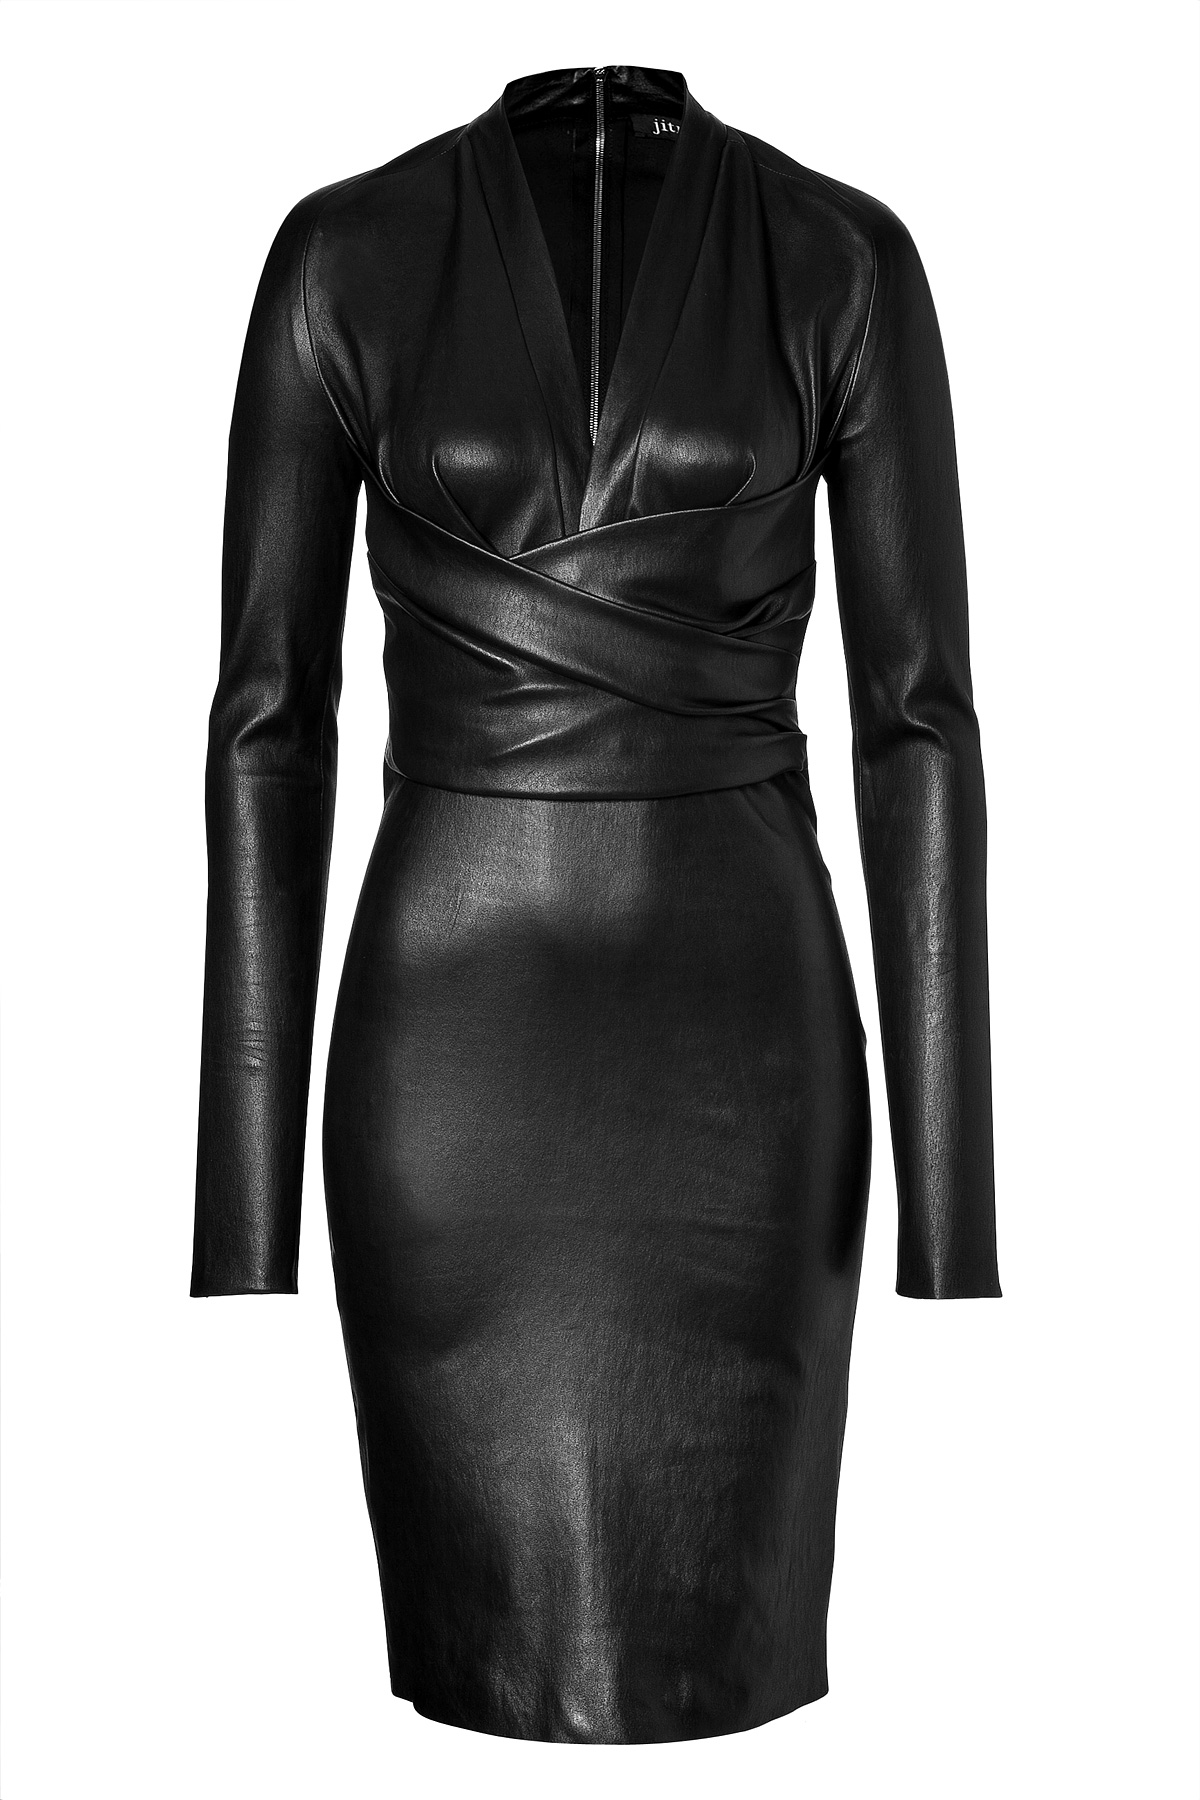 Jitrois Leather Astoria Dress in Black - Lyst